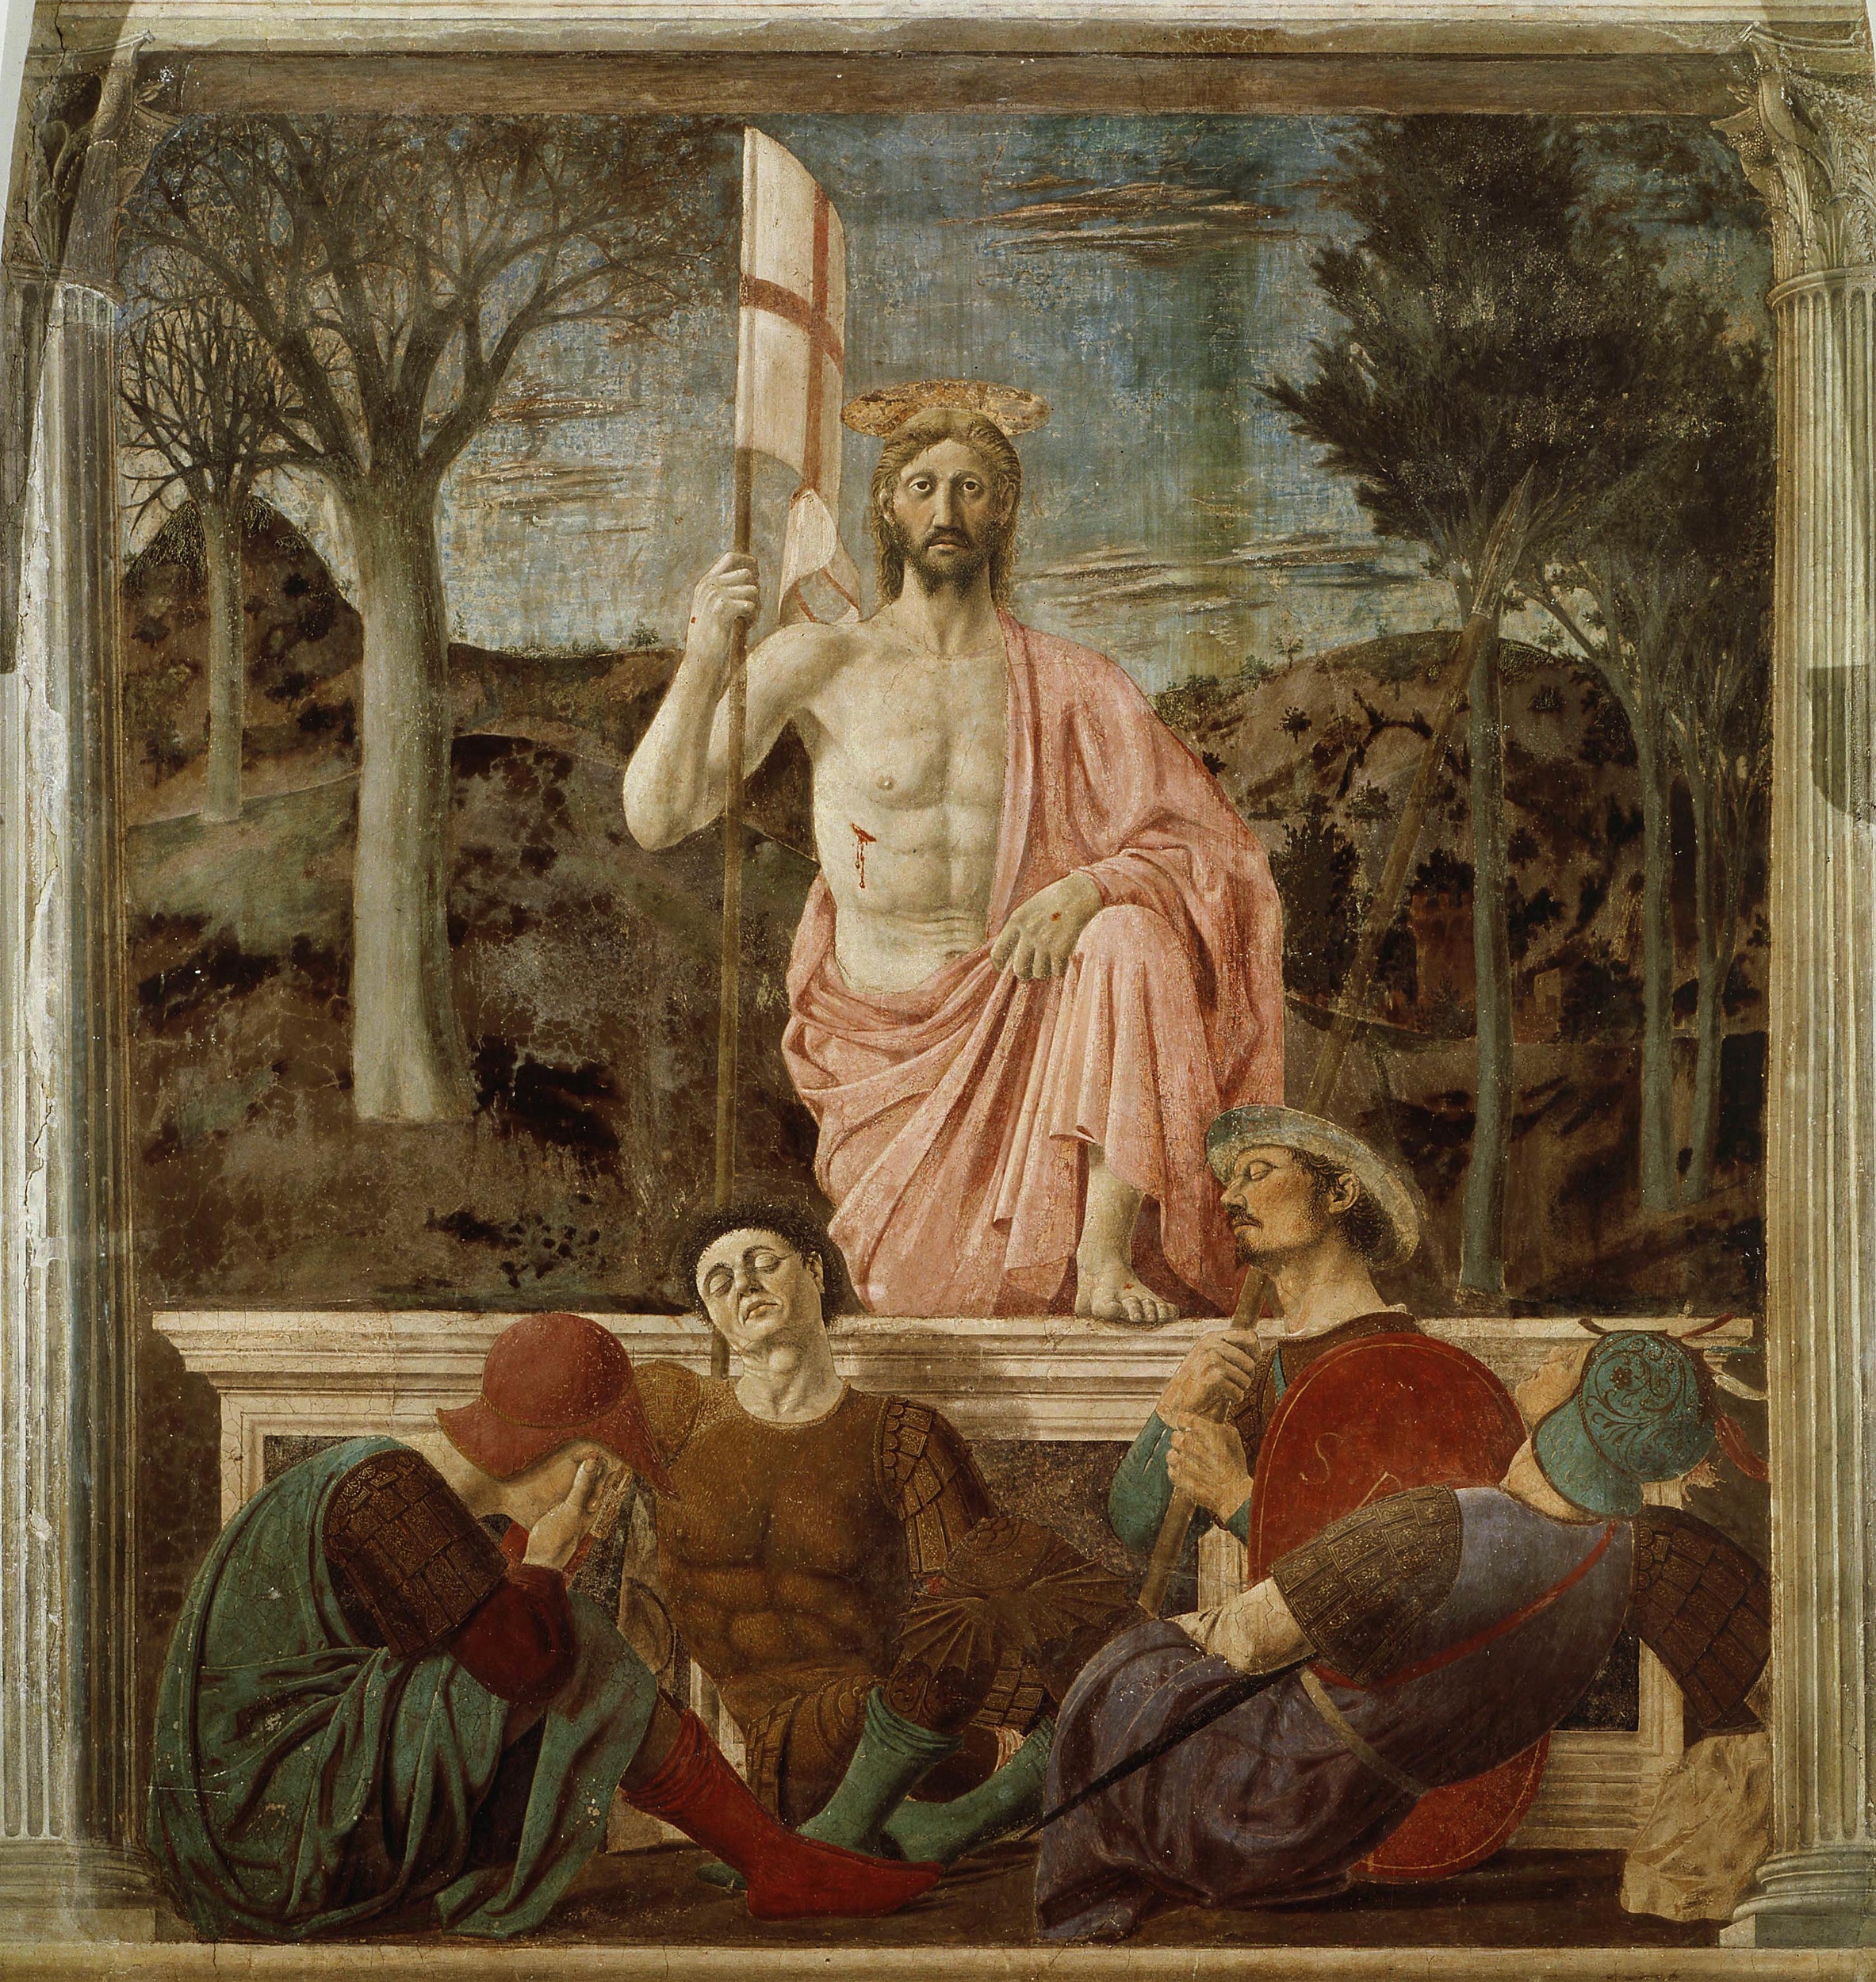 The Resurrection by Piero della Francesca - 1465 - 89 in × 79 in Museo Civico, Sansepolcro